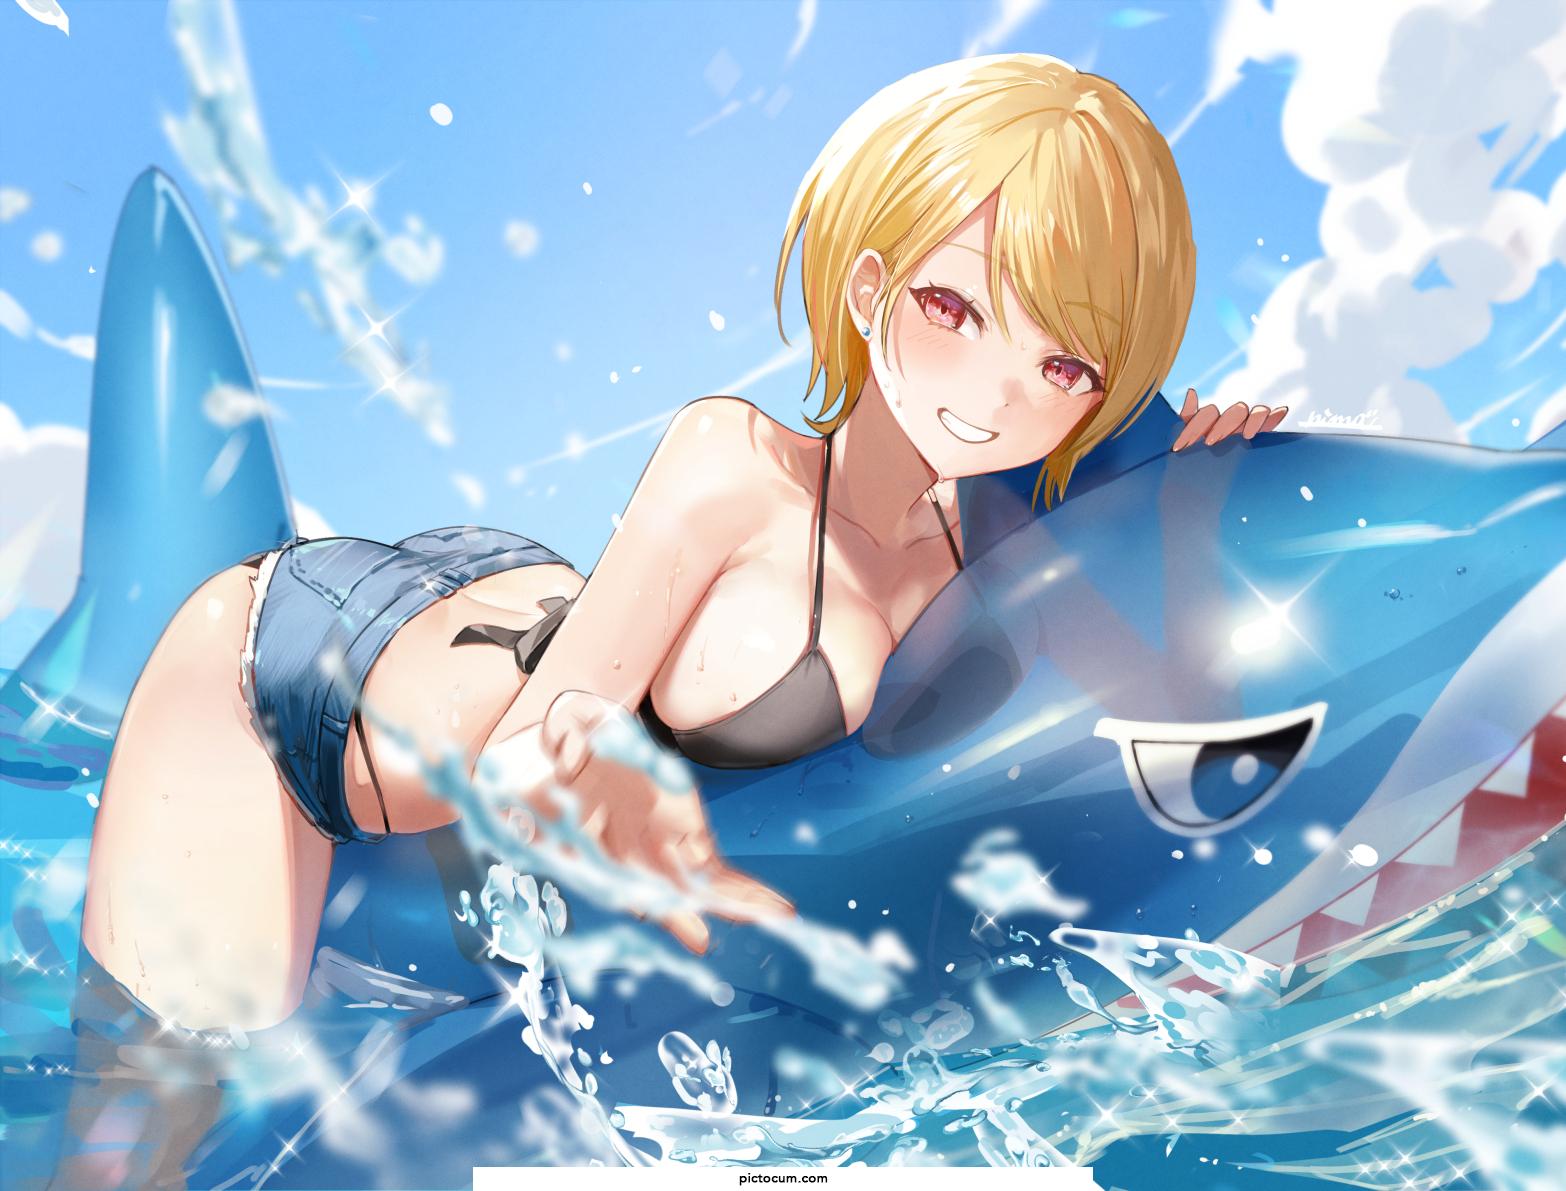 Kurae Riding Inflatable Shark